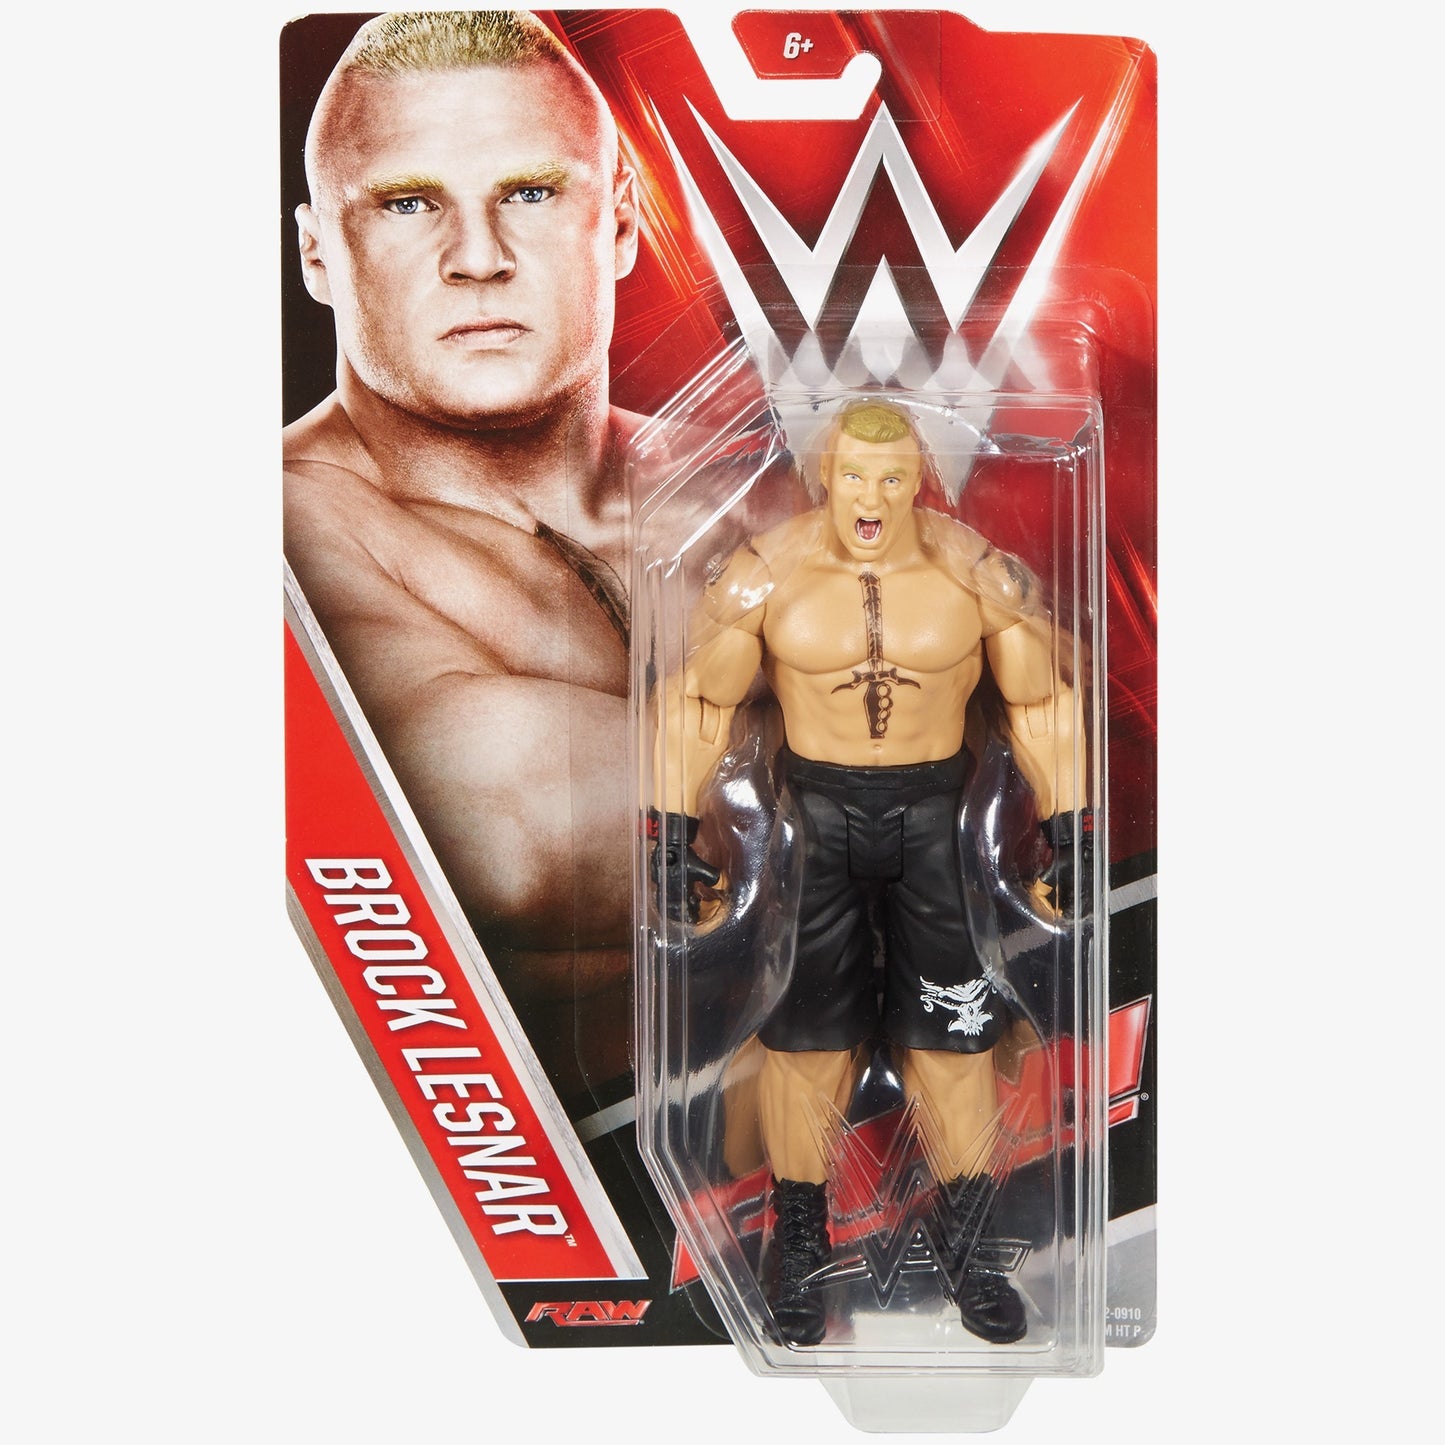 Brock Lesnar - WWE Superstar Series #60 Action Figure